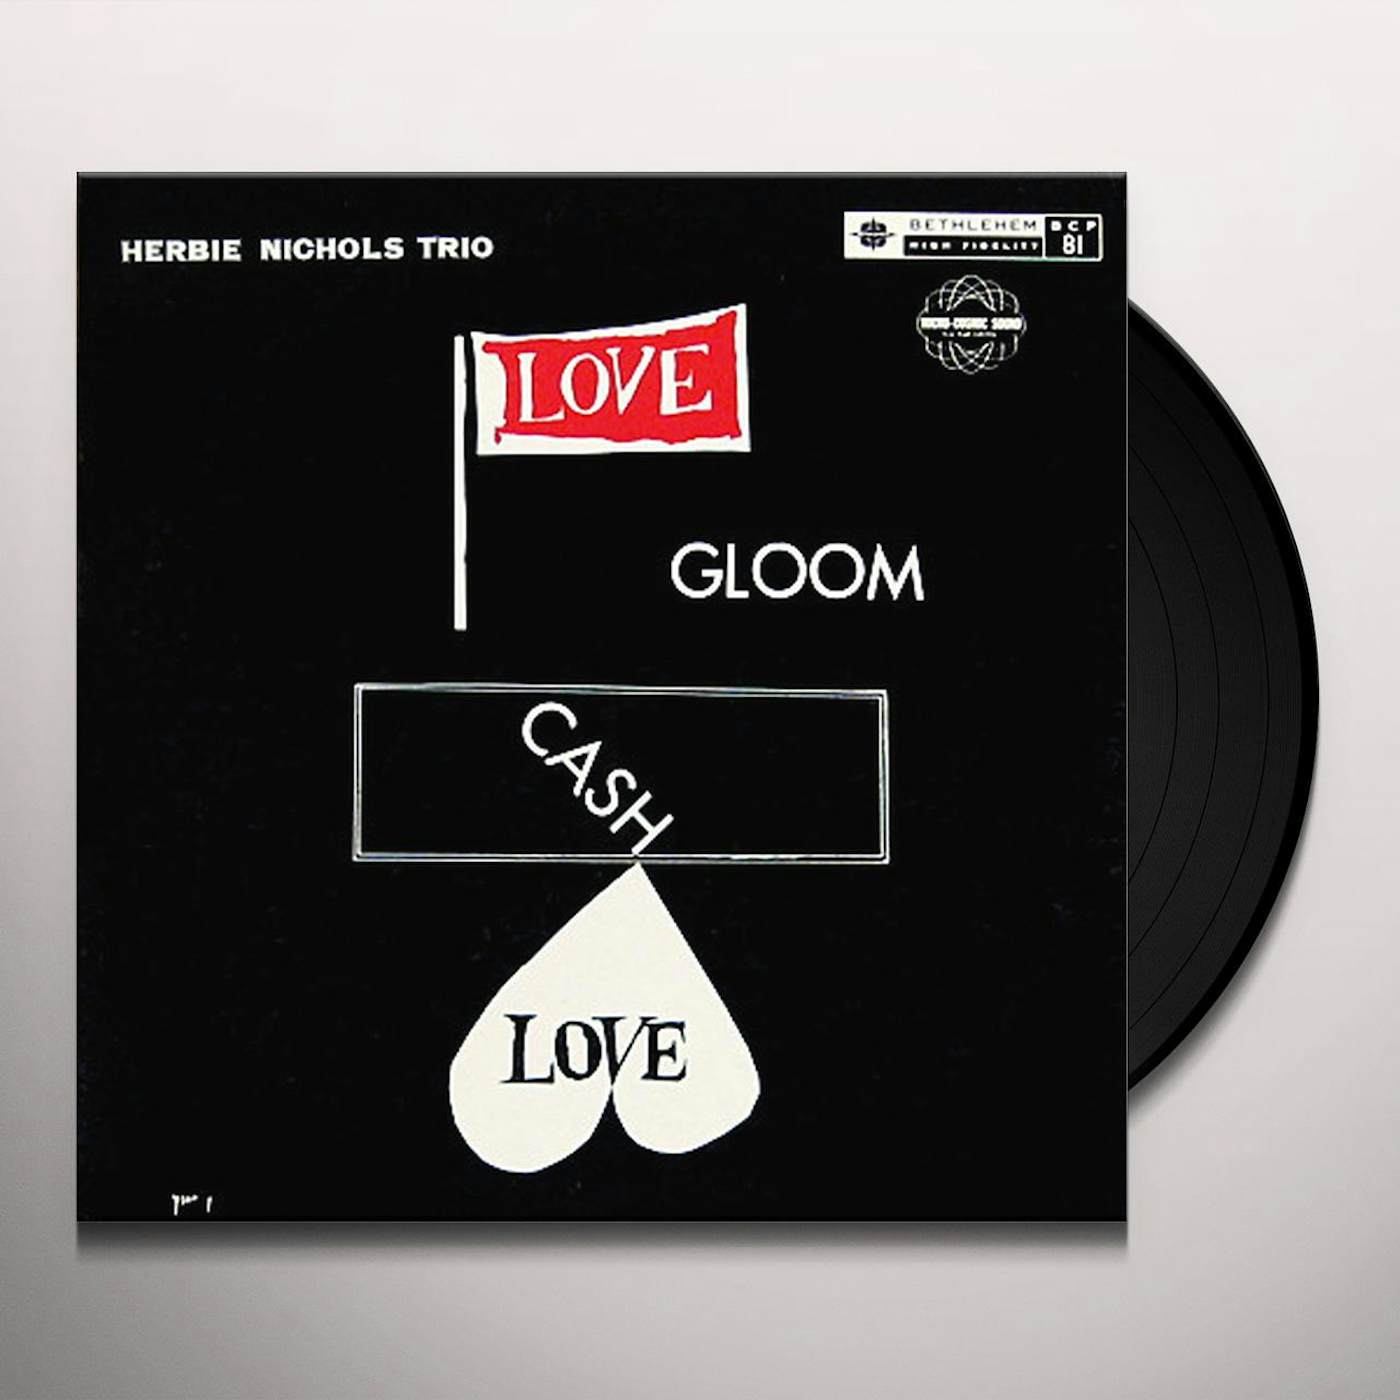 Herbie Nichols Trio LOVE GLOOM CASH LOVE Vinyl Record